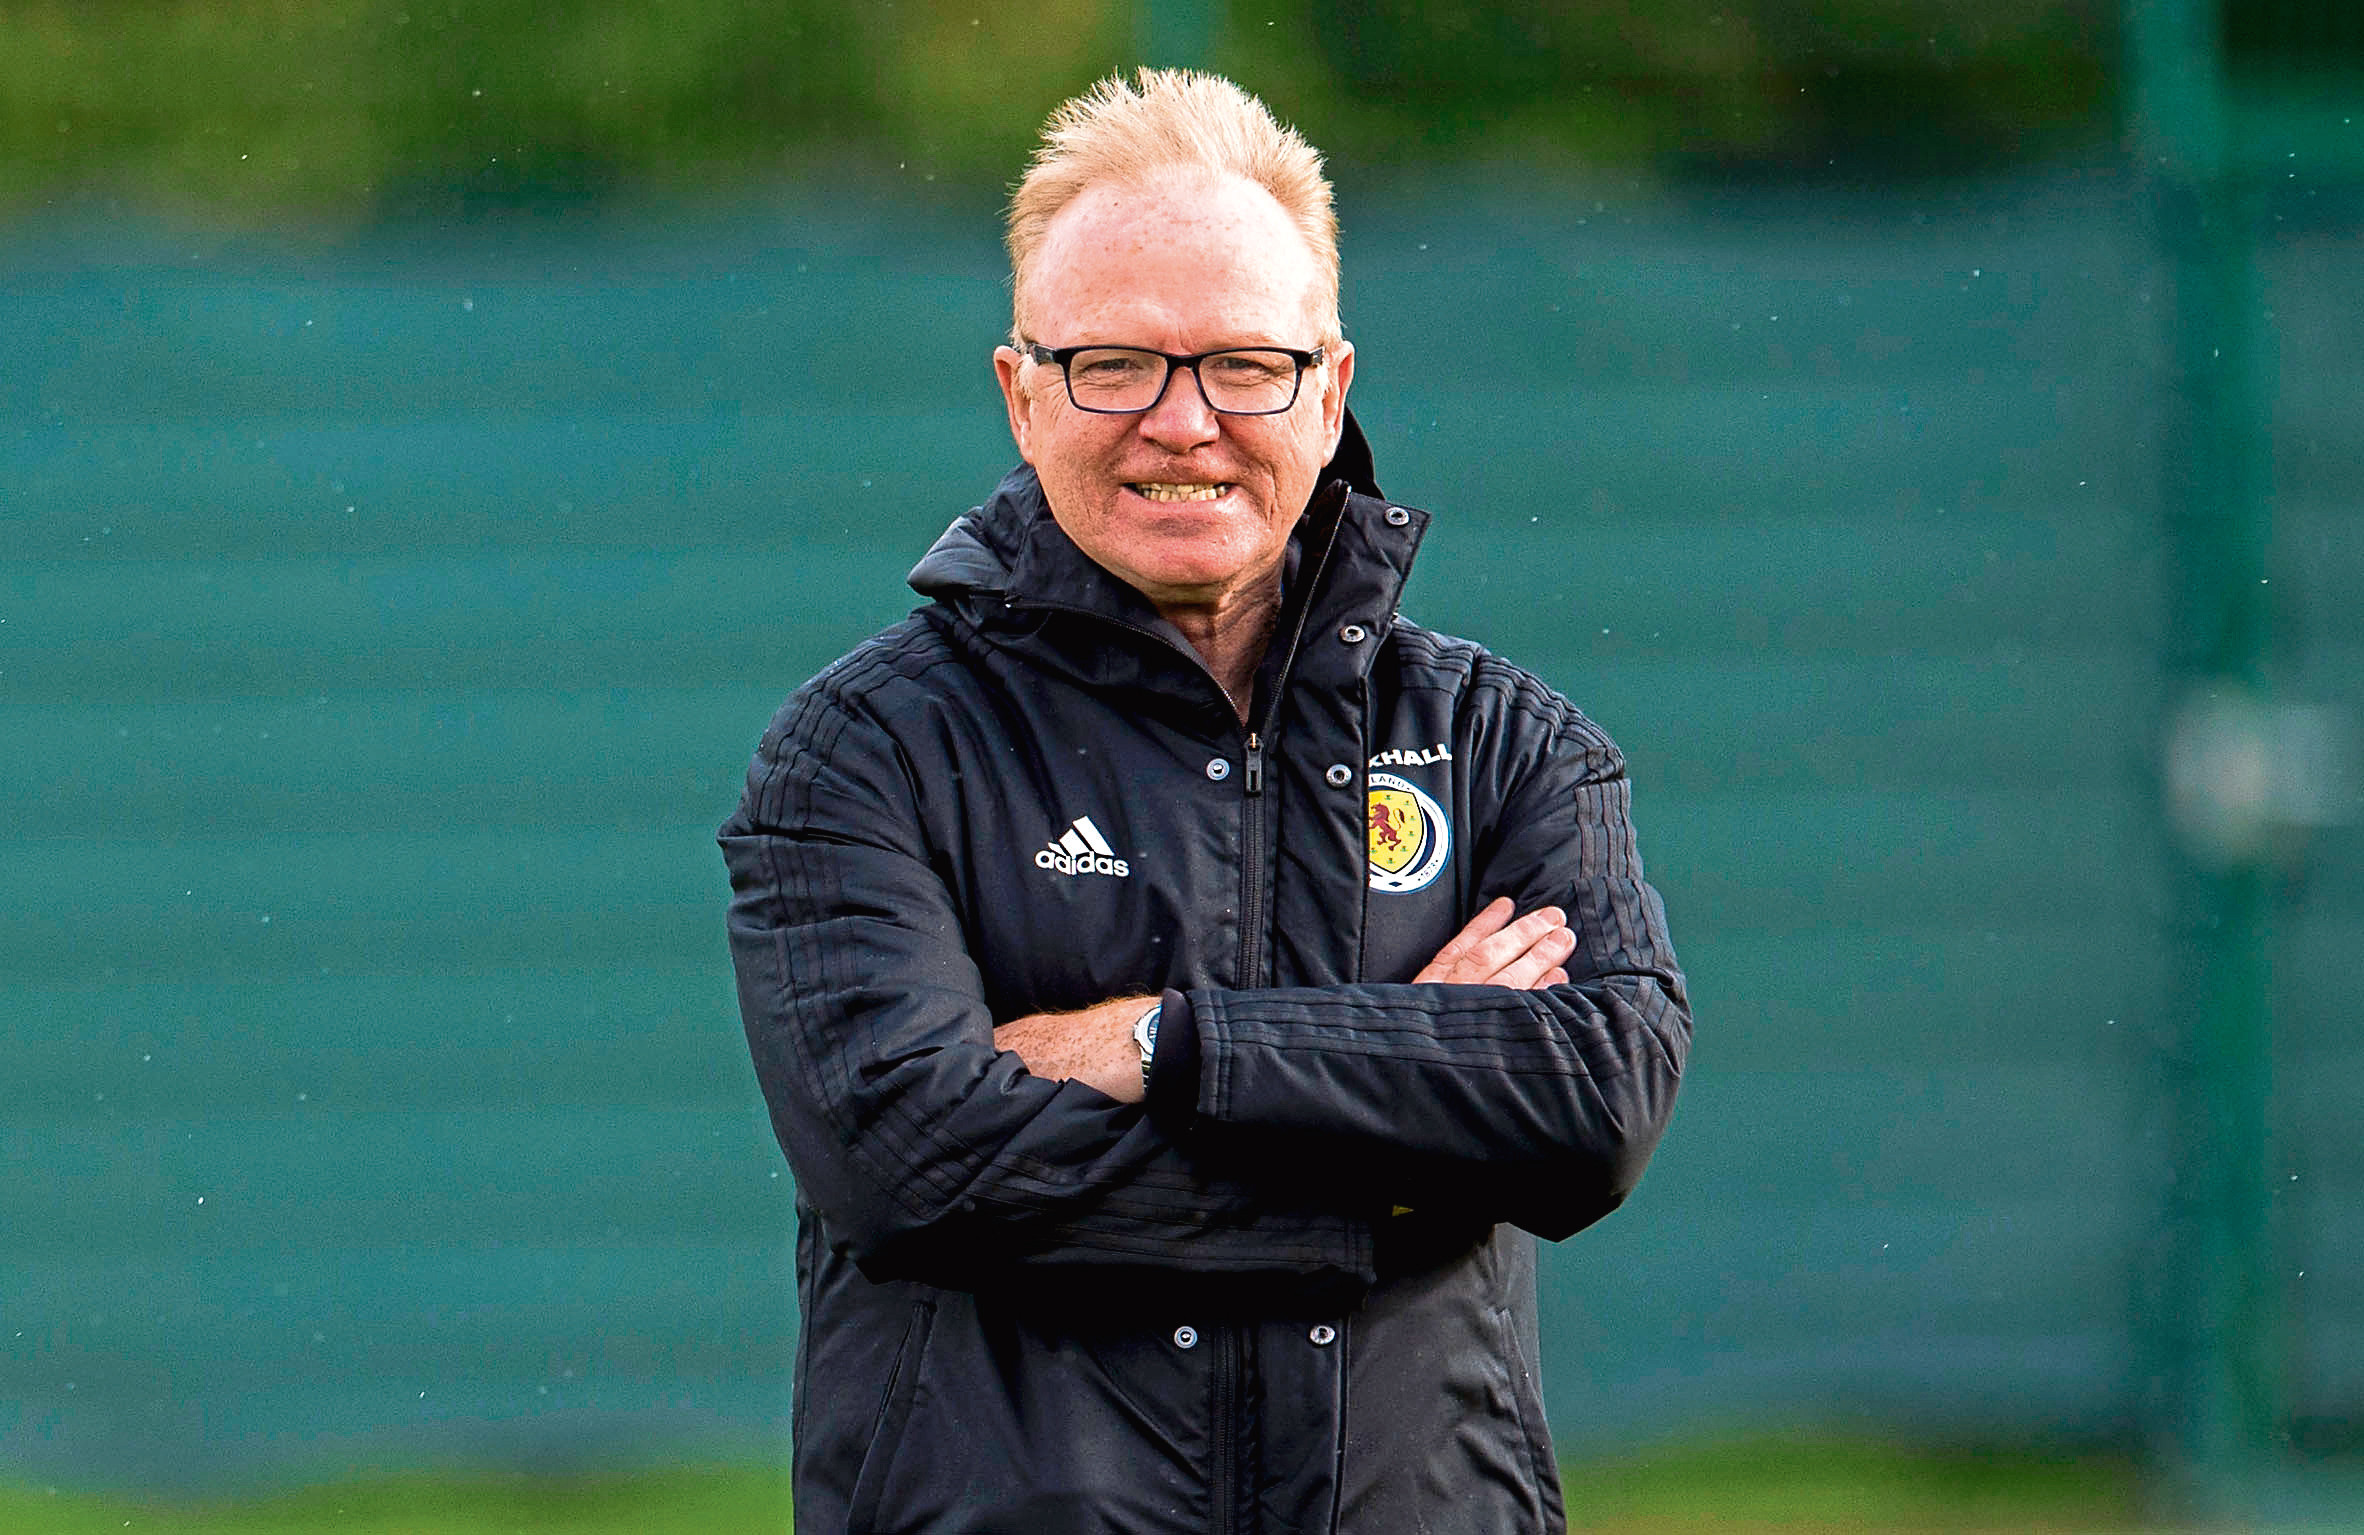 Scotland manager Alex McLeish